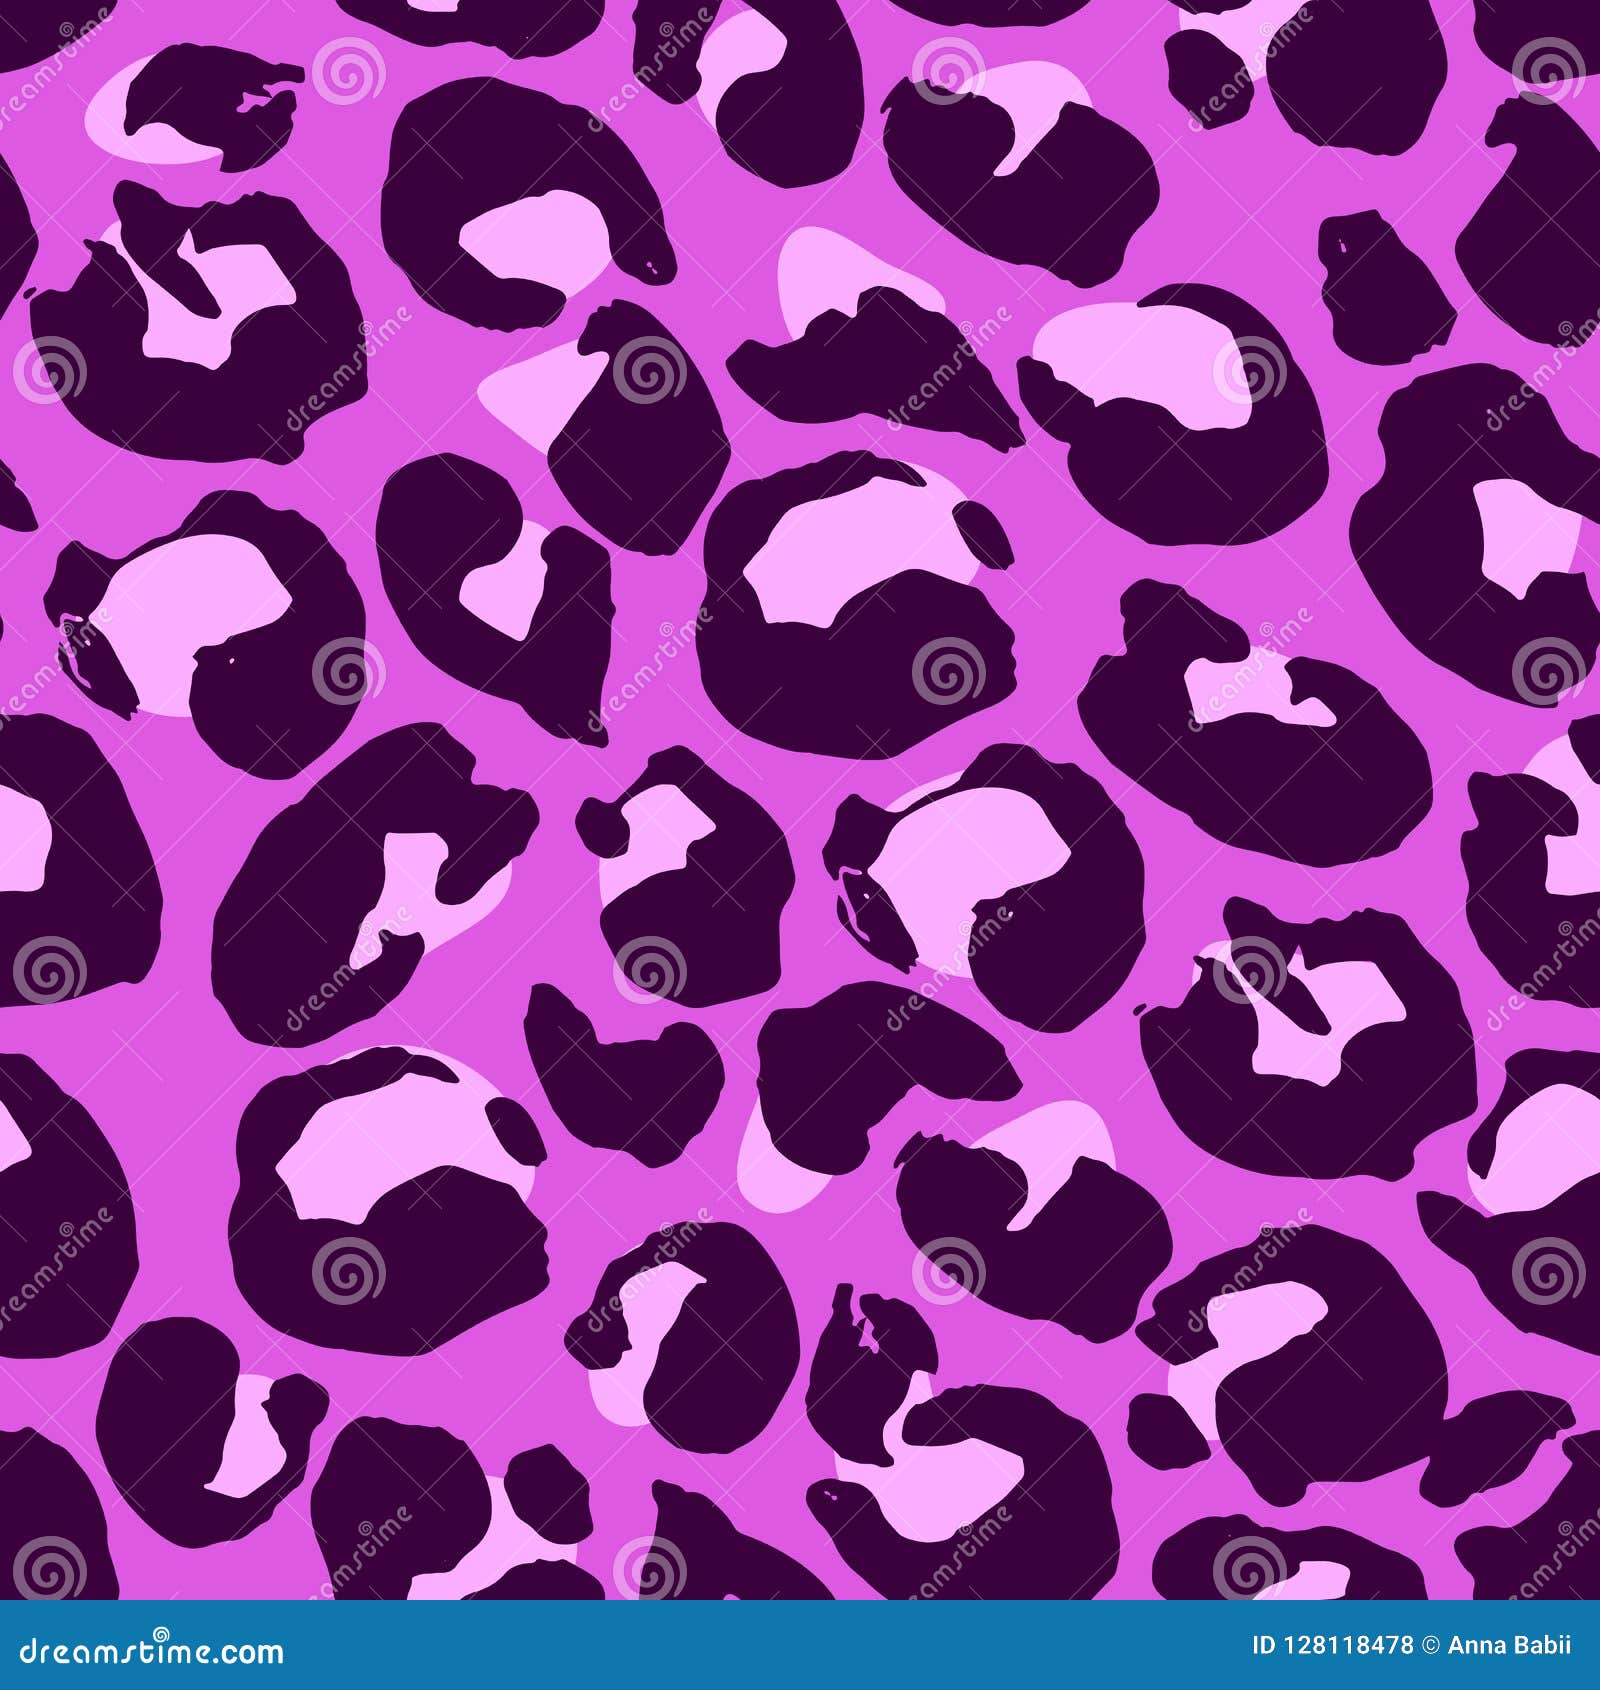 Vector Illustration Leopard Print Seamless Pattern. Violet Hand Drawn ...